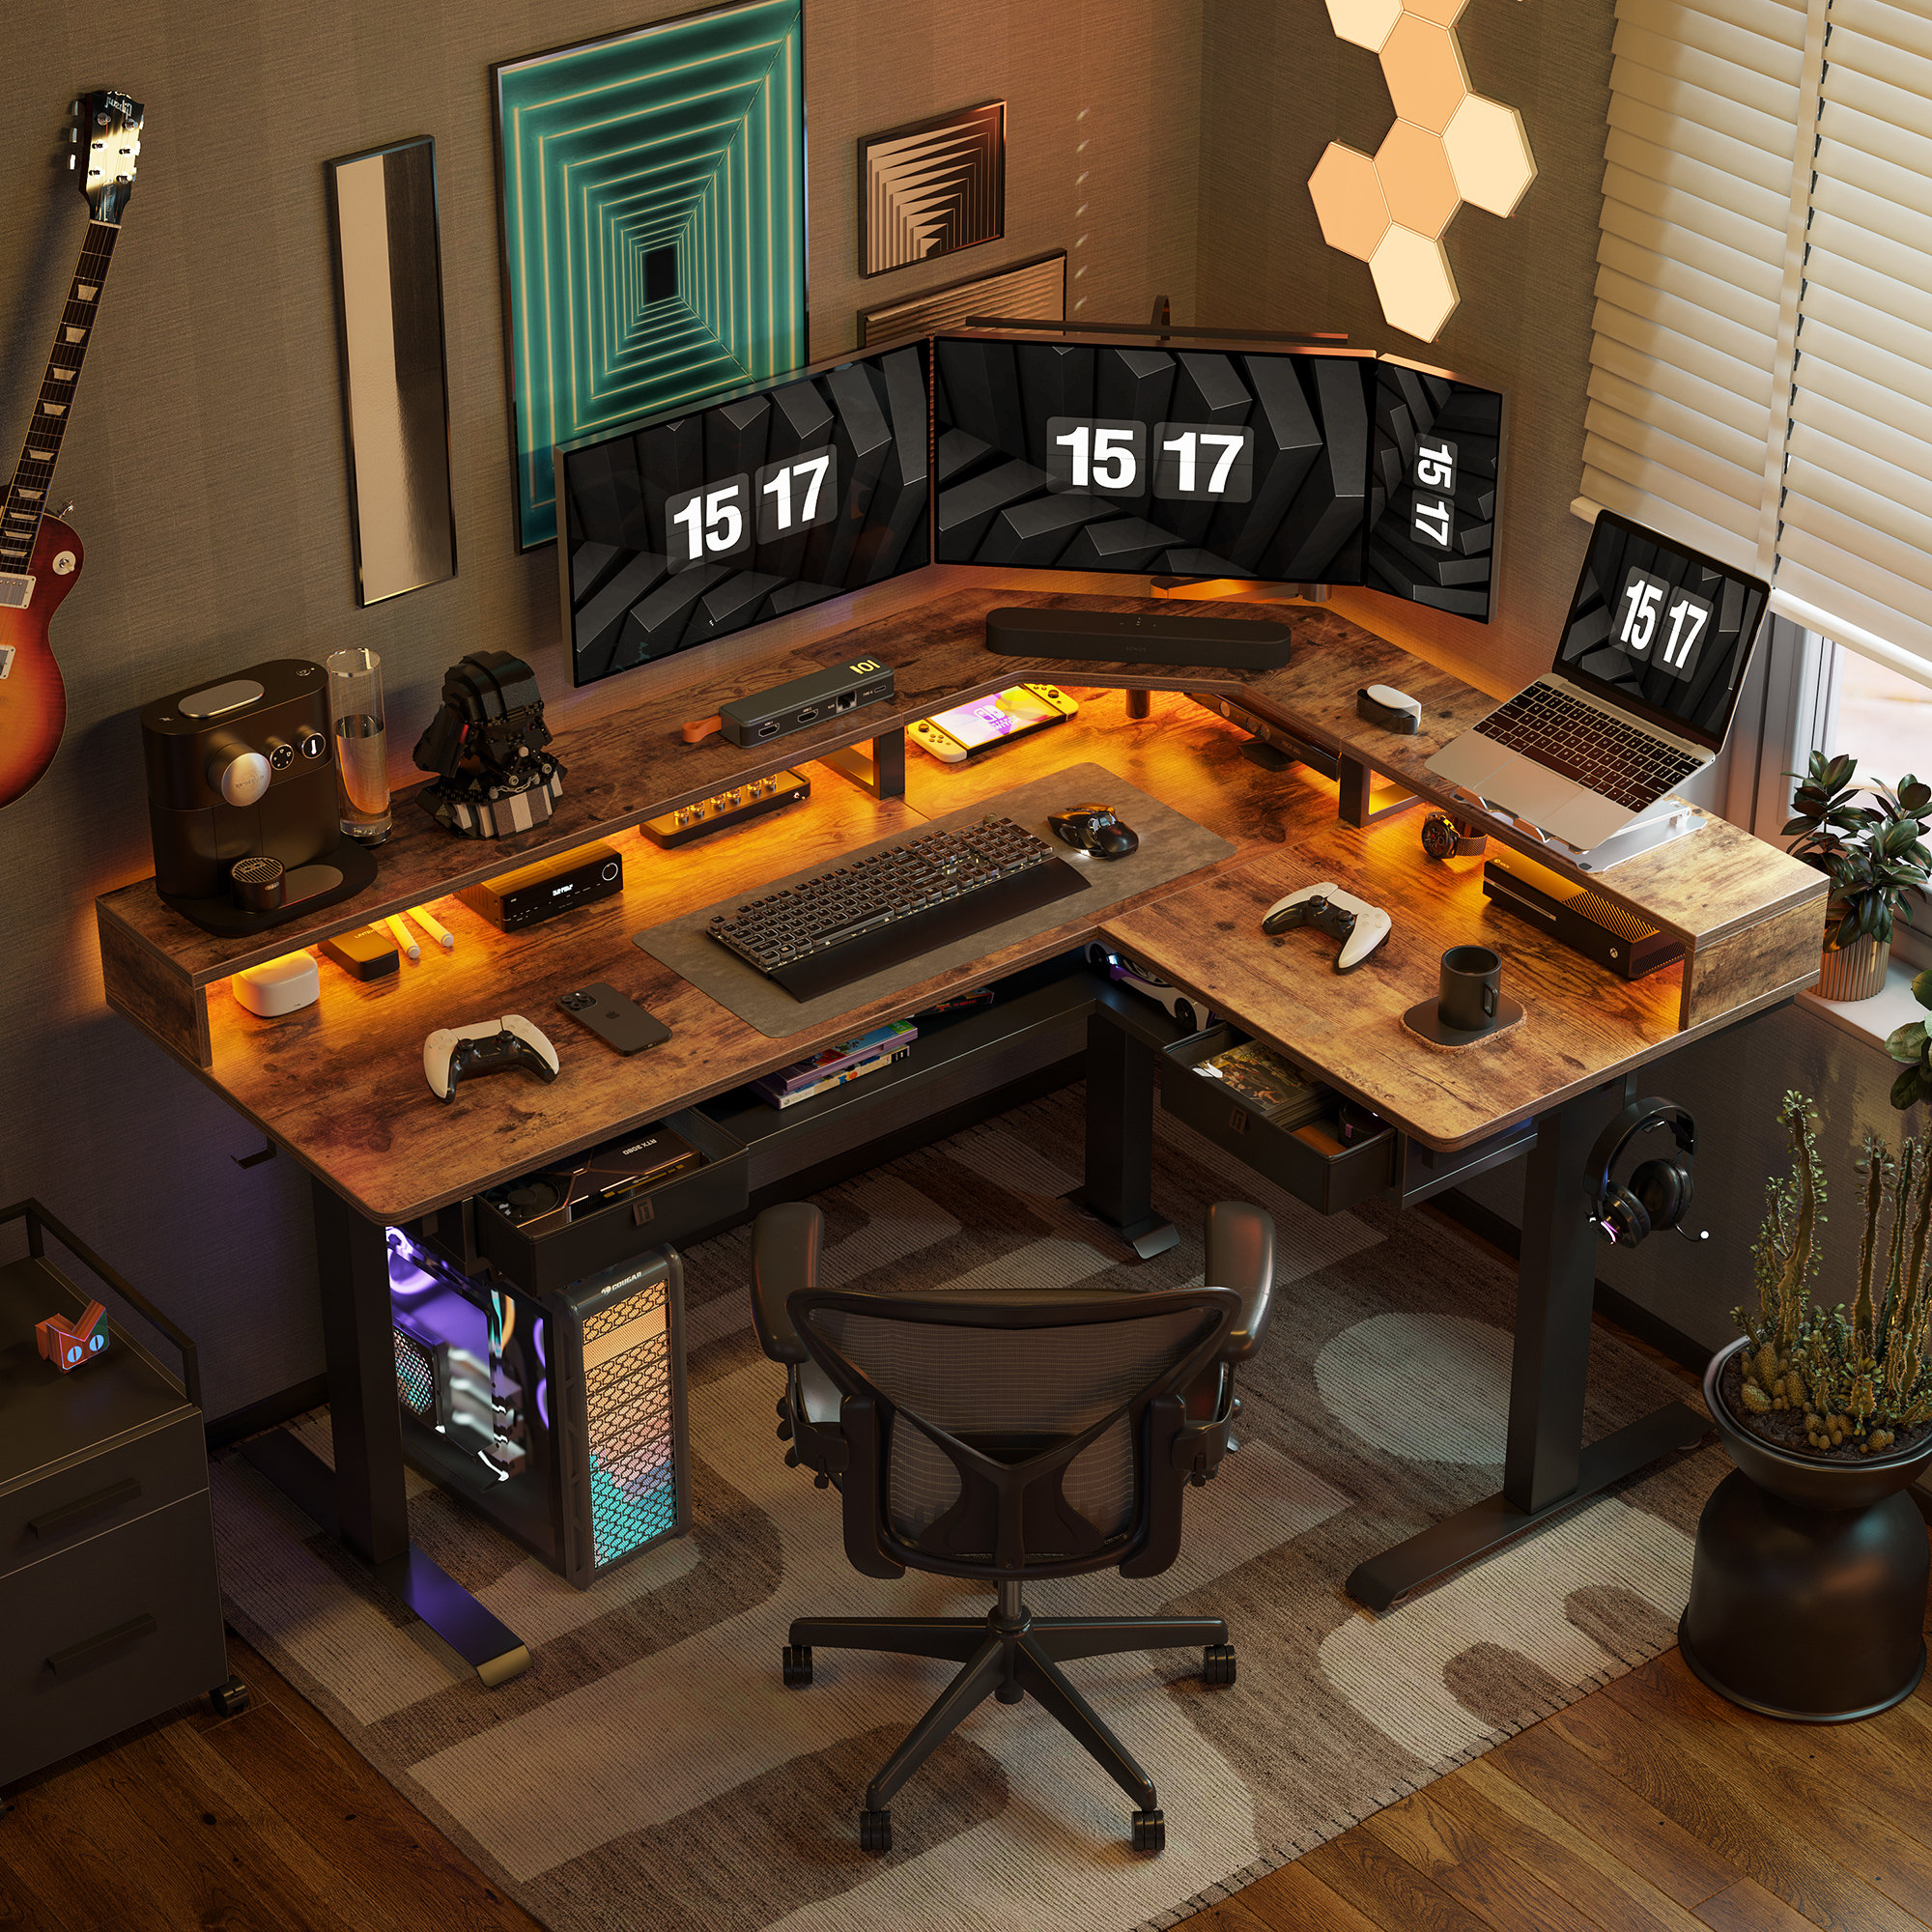 FEZIBO L-Shaped Standing Desk V2 Home Office Studying Gaming